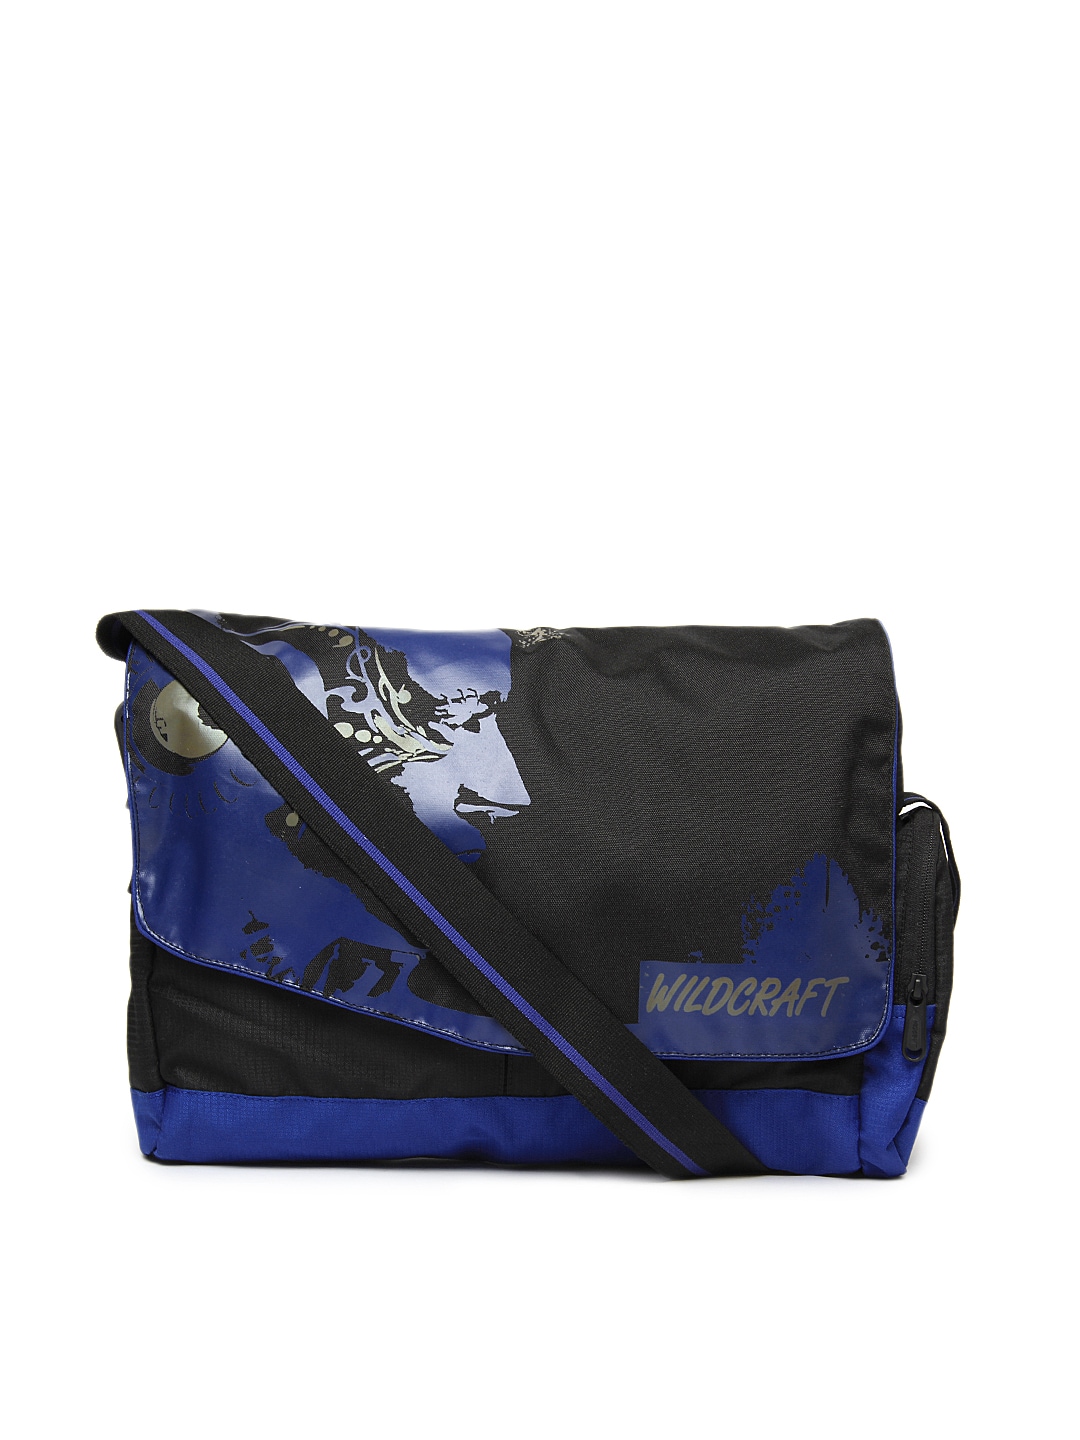 Wildcraft Unisex Gear for Life Black & Blue Printed Messenger Bag